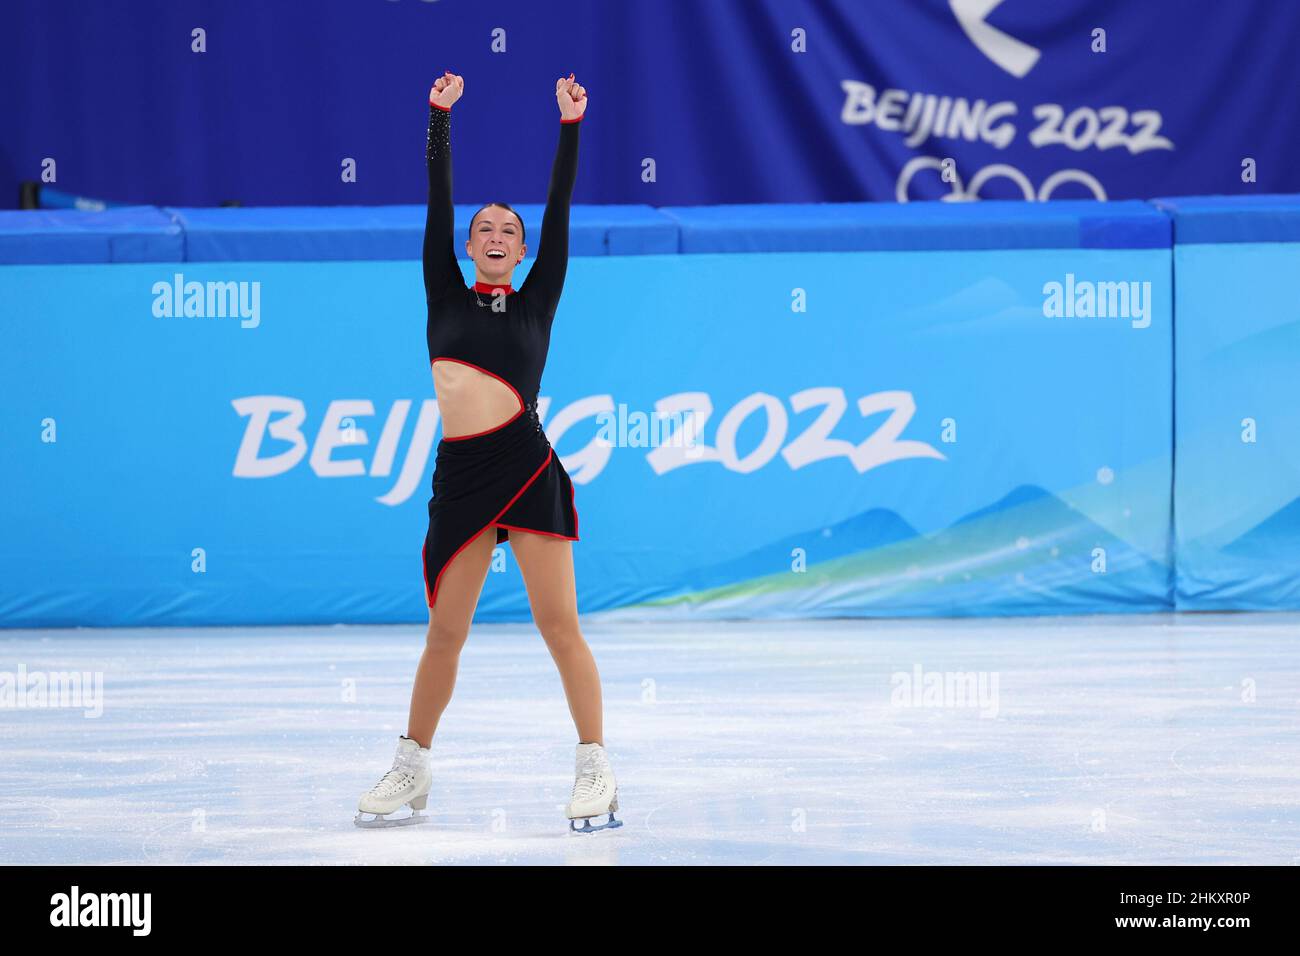 Nicole Schott (GER), Action, Figure Skating, FEBRUARY 6, 2022 - Figure  Skating : Team Women's Short Program during the Beijing 2022 Olympic Winter  Games at Capital Indoor Stadium in Beijing, China. 24th